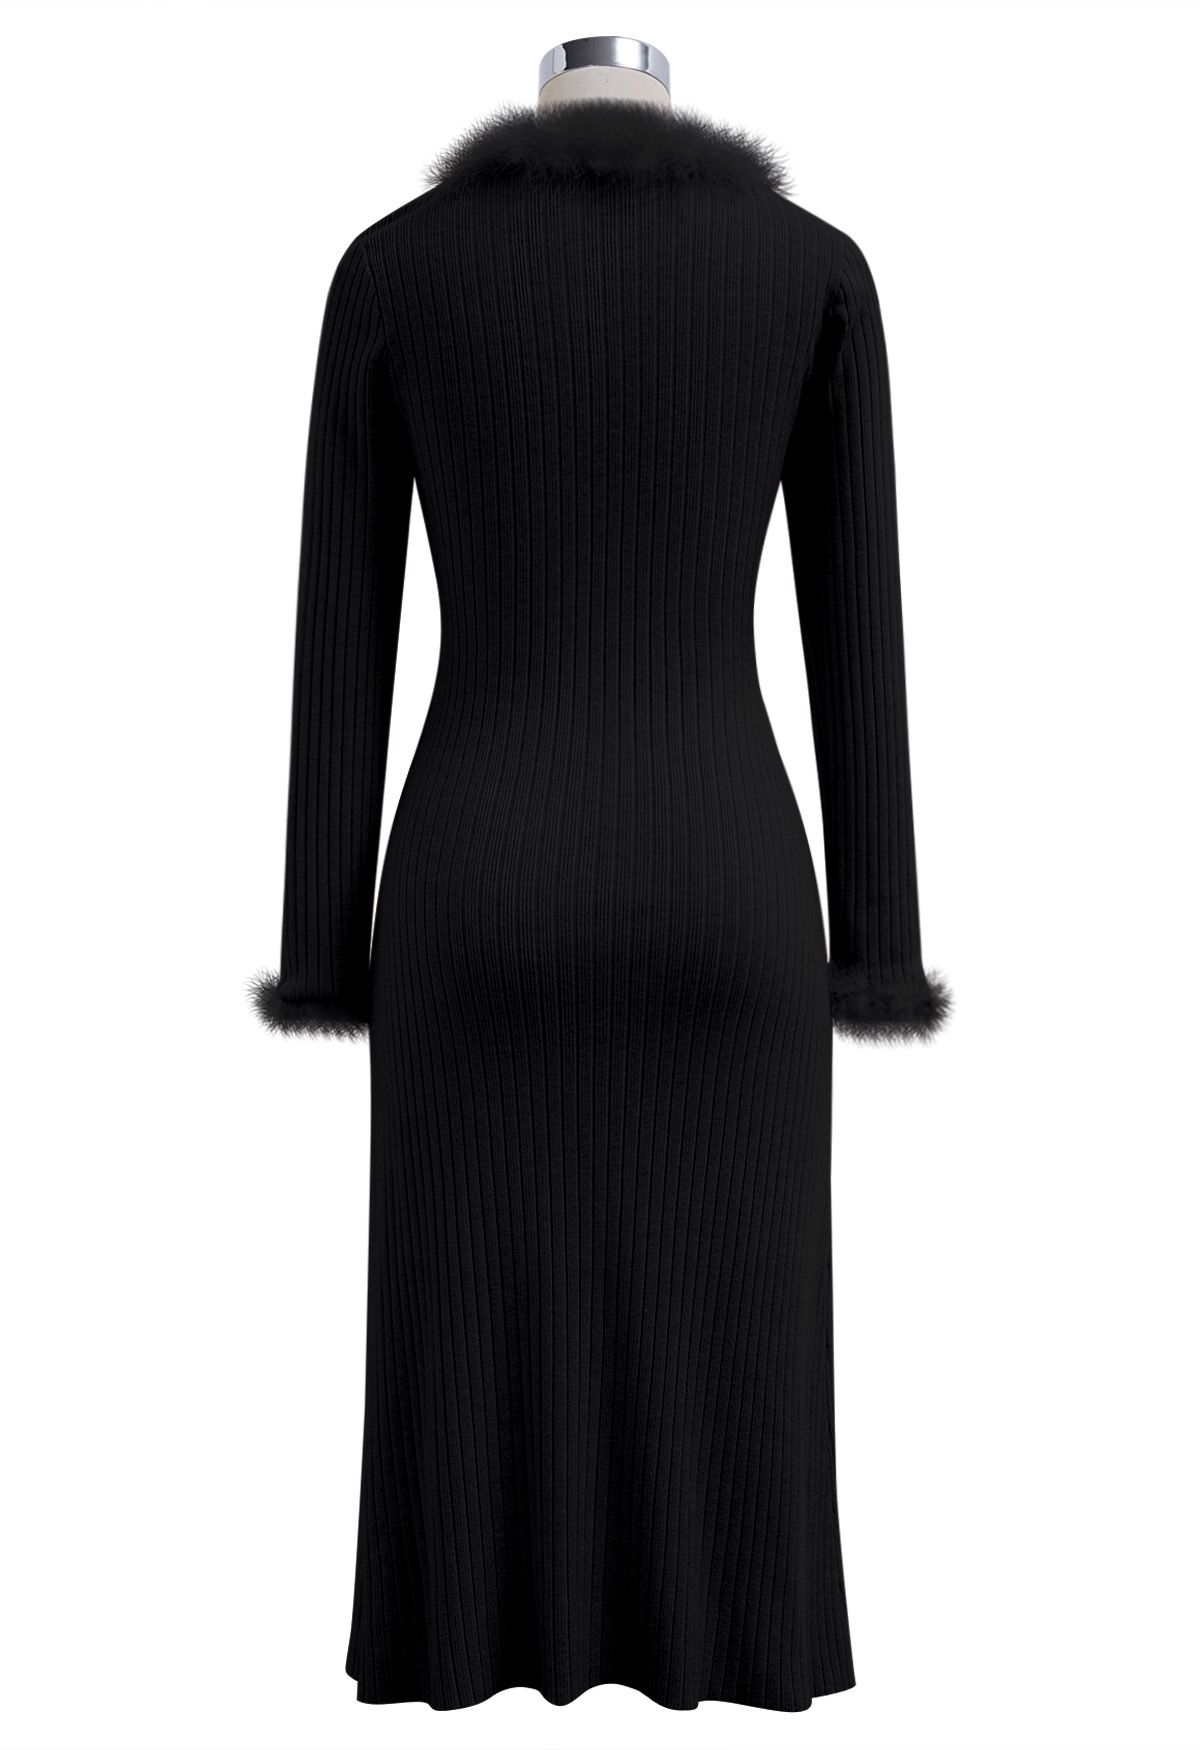 Graceful Feather Trim Surplice Neck Knit Dress in Black